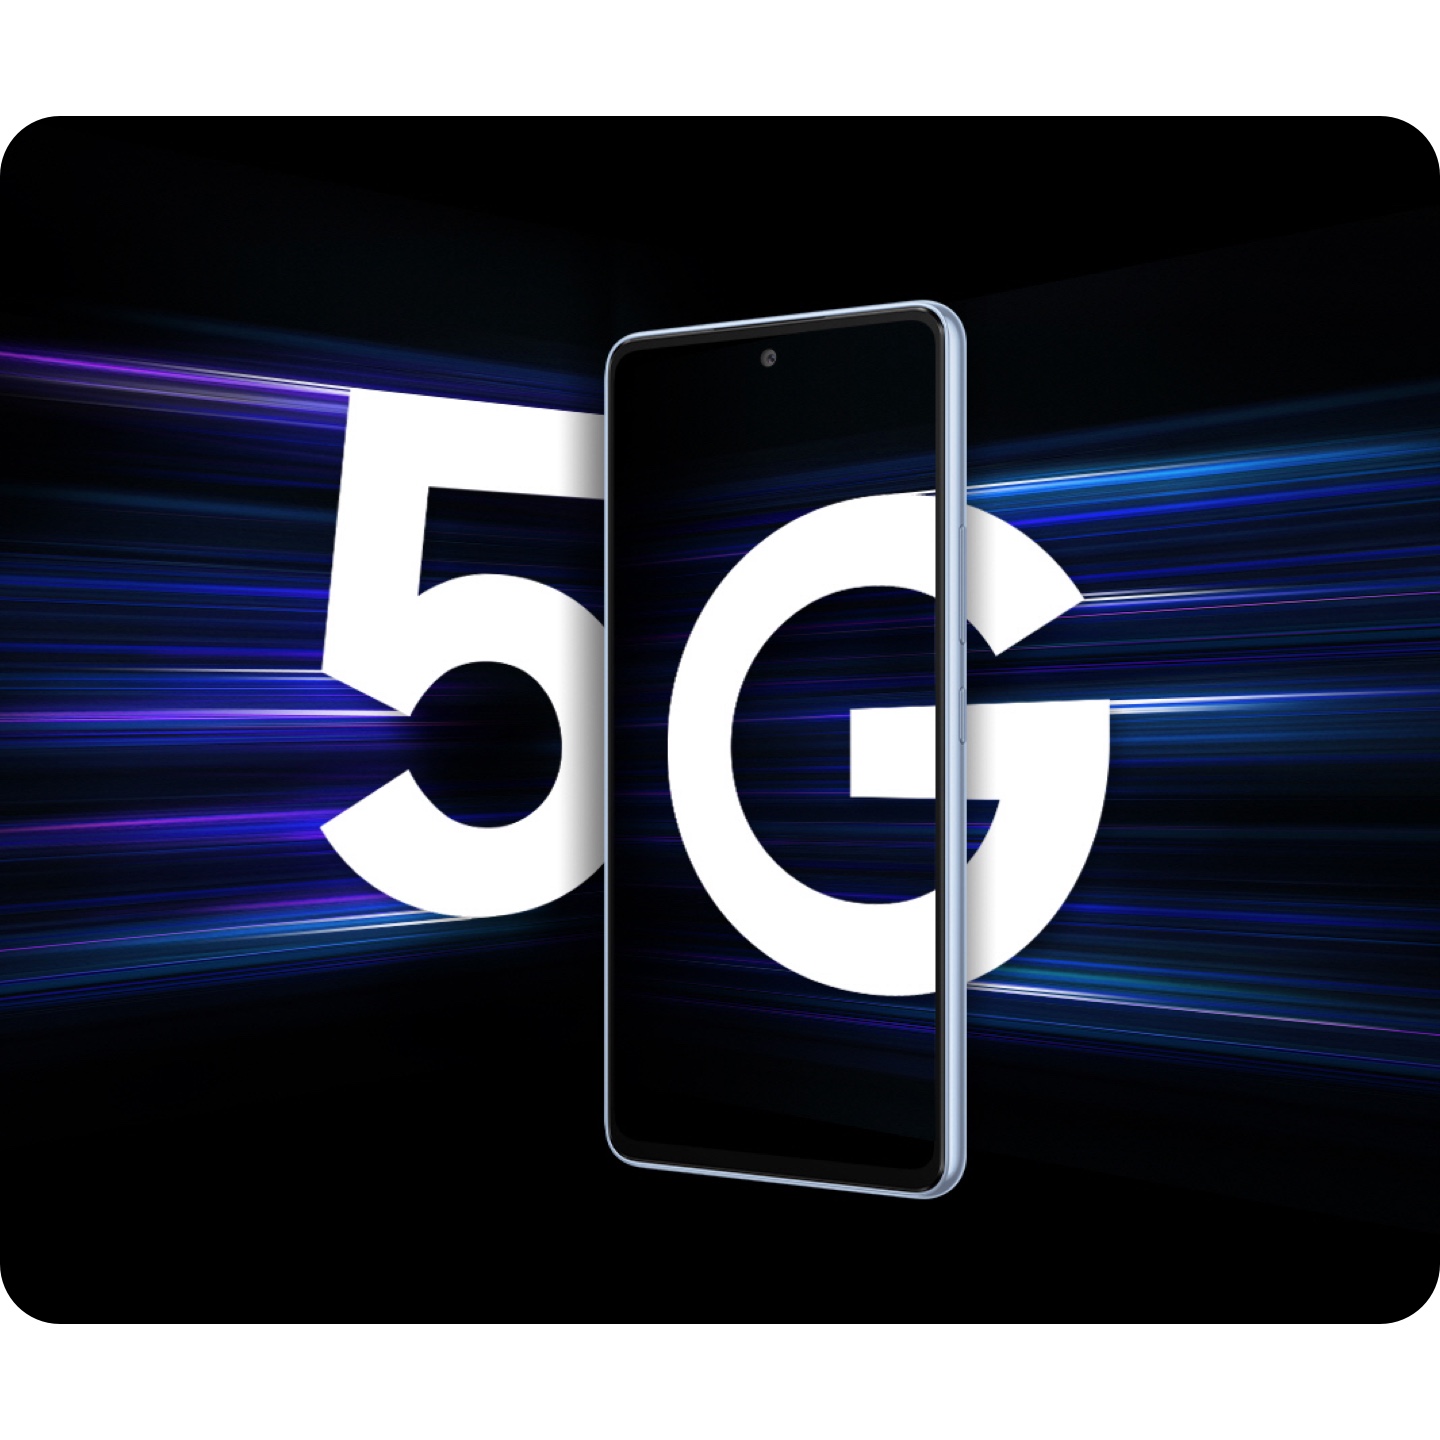 SM-A536VZKAVZW, Galaxy A53 5G 128GB, Black (Verizon)